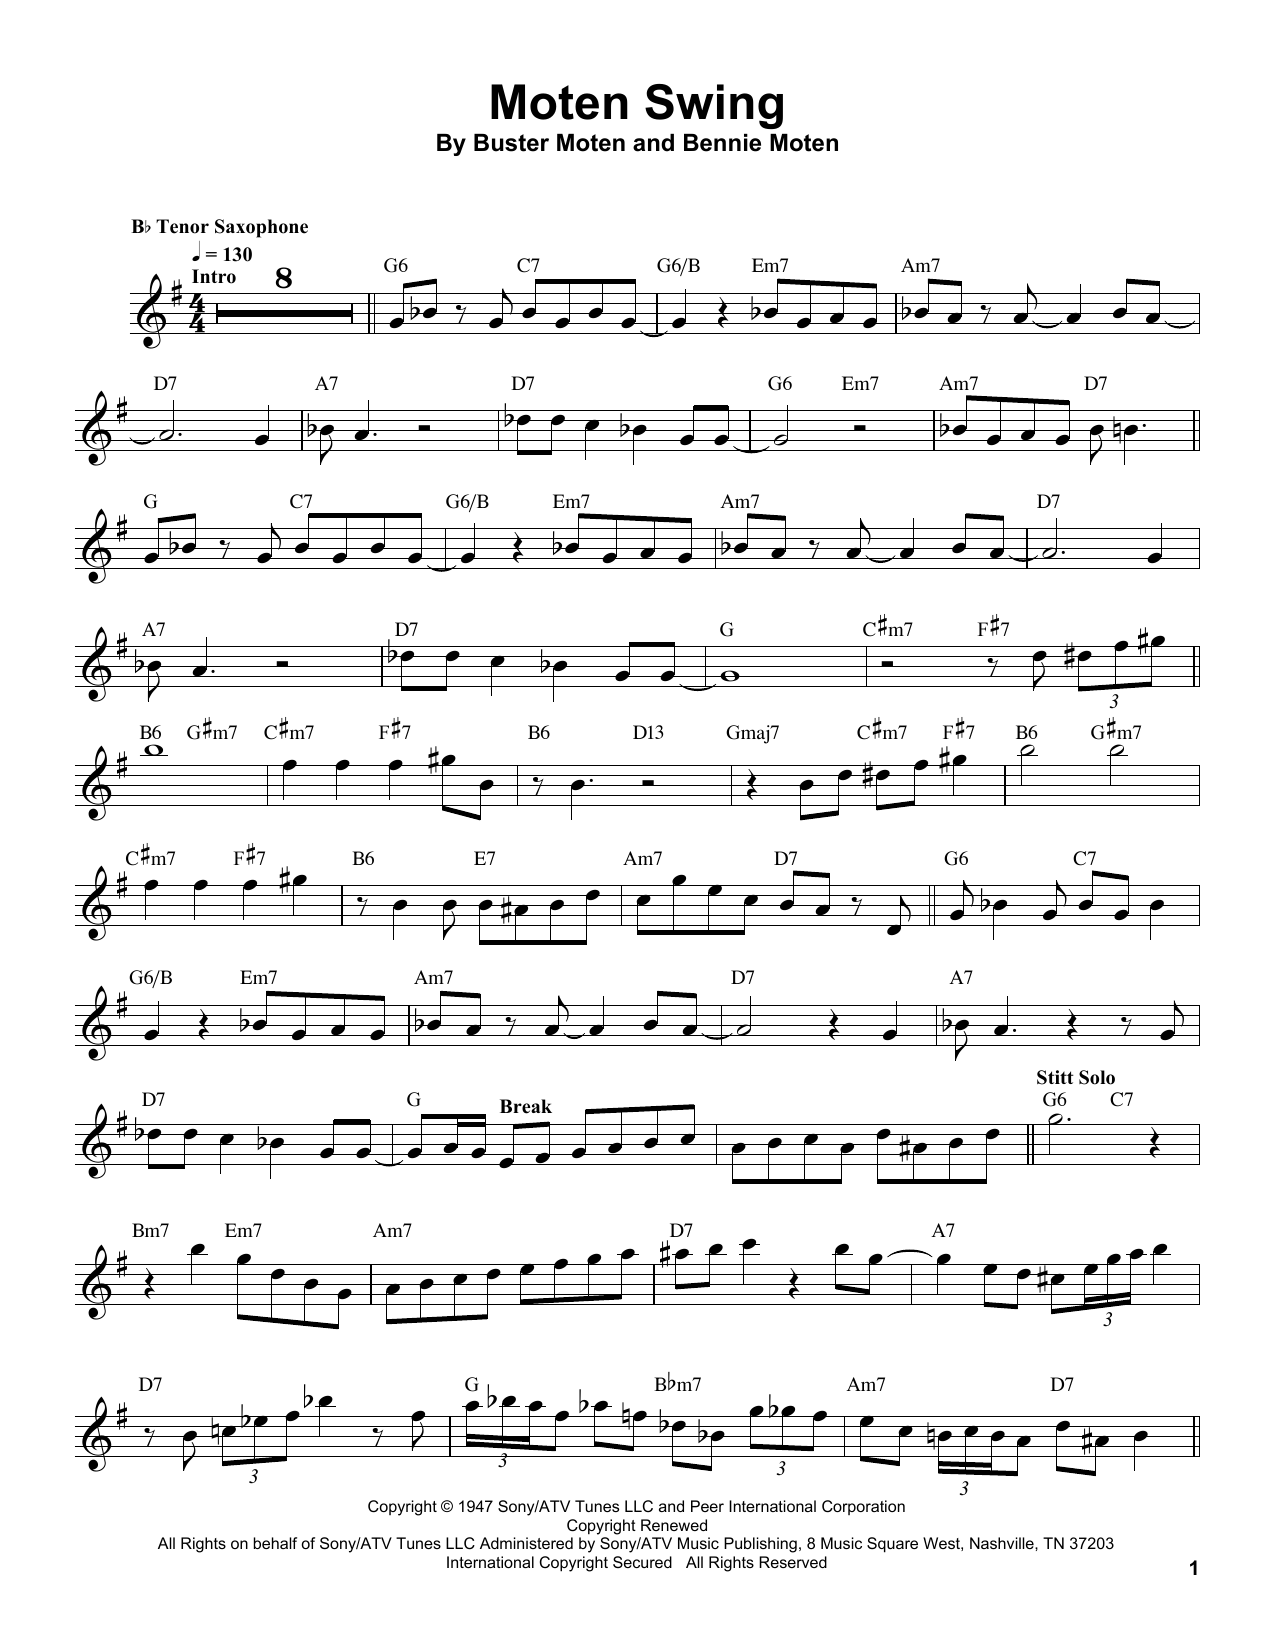 Sonny Stitt Moten Swing Sheet Music Notes & Chords for Tenor Sax Transcription - Download or Print PDF